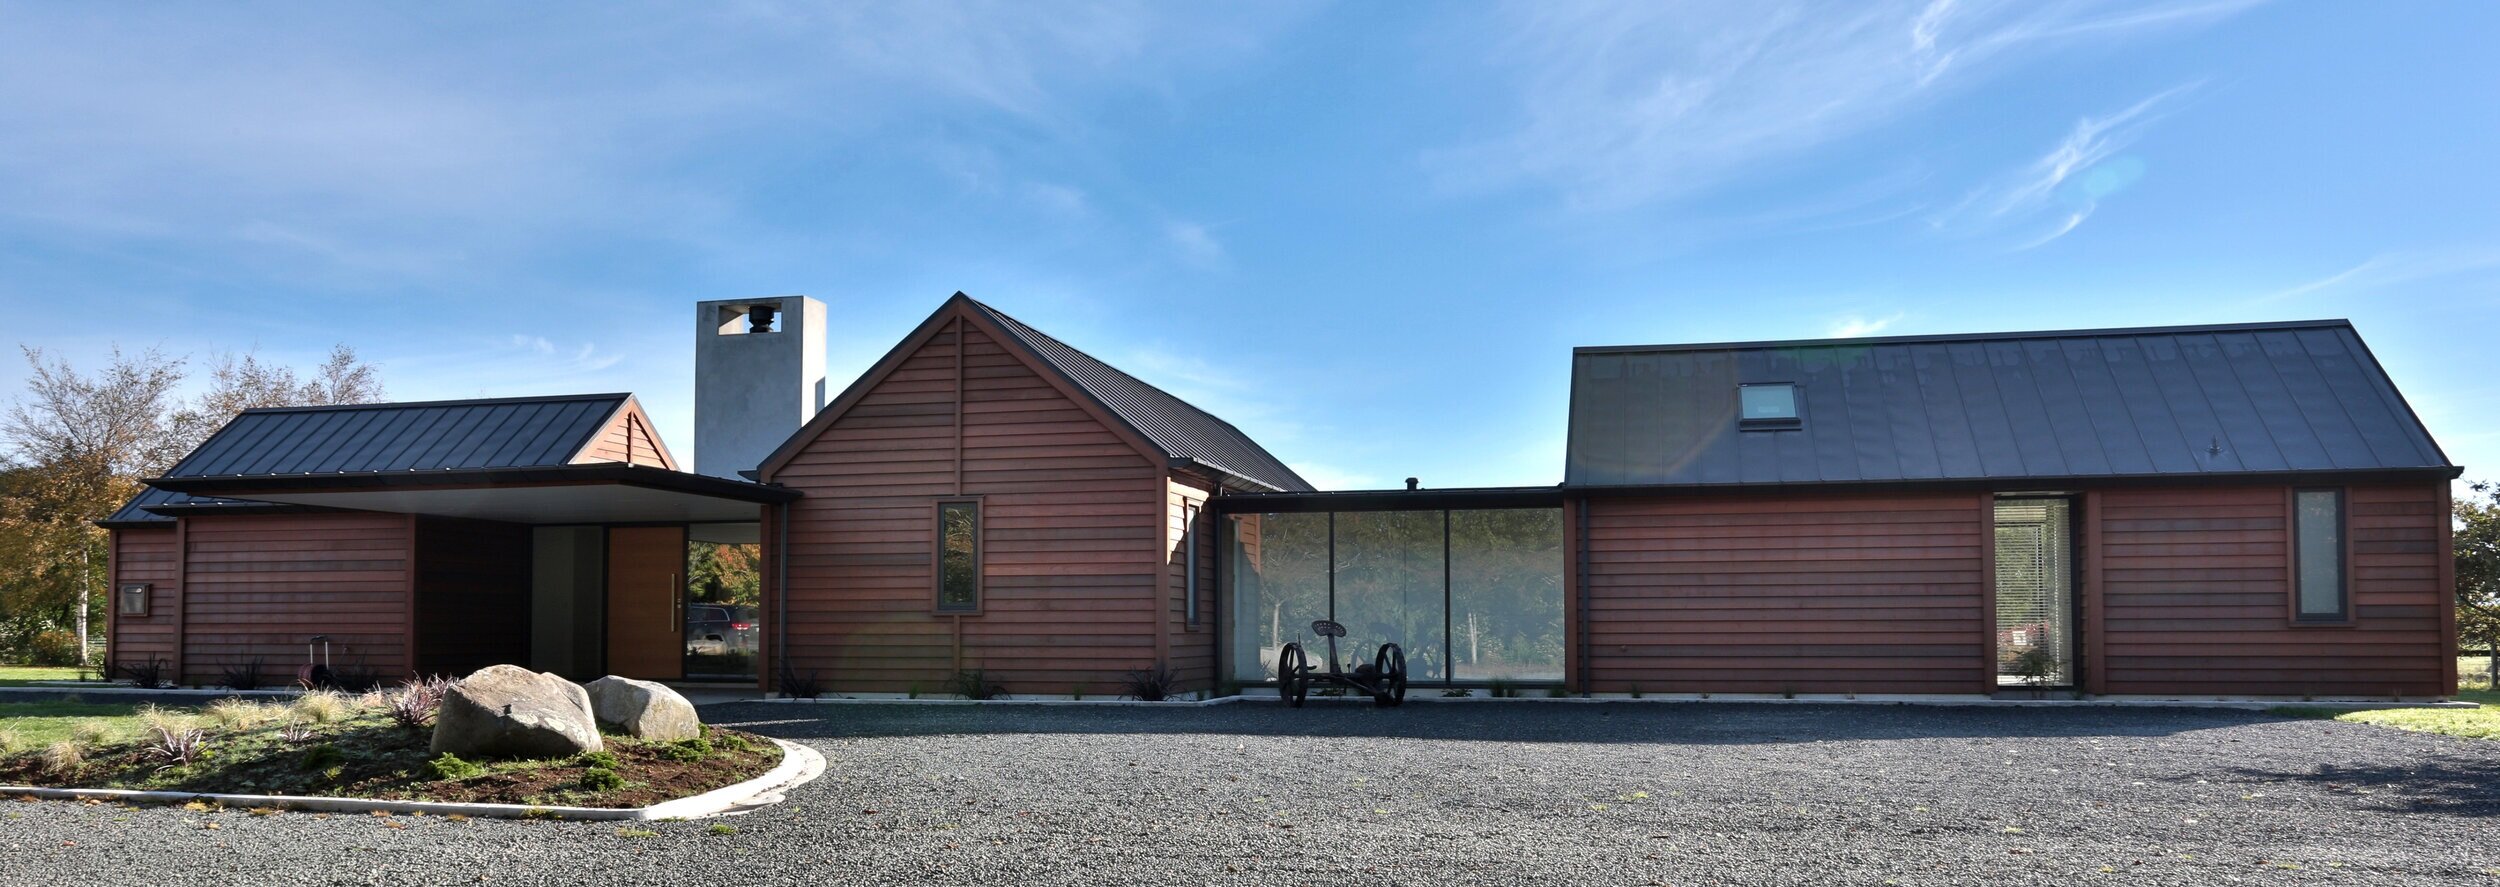 Mason%26Wales-Invercargill-House-Invercargill-Houses-Contemporary-106.jpg